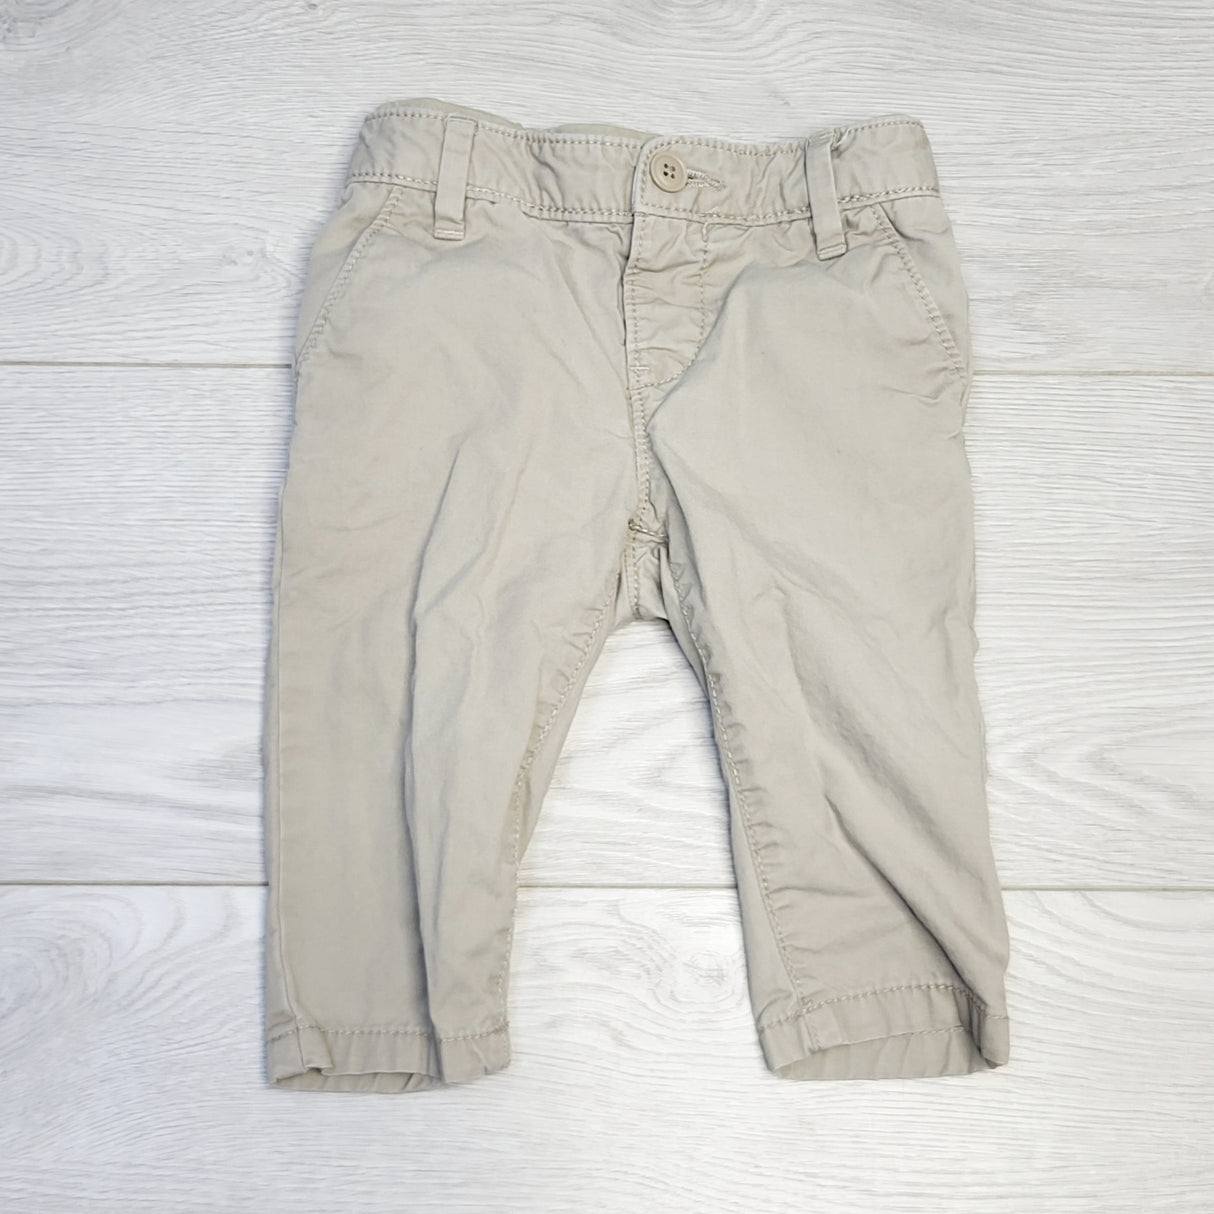 CHOL2 - Gap khaki pants with cotton waistband, size 6-12 months